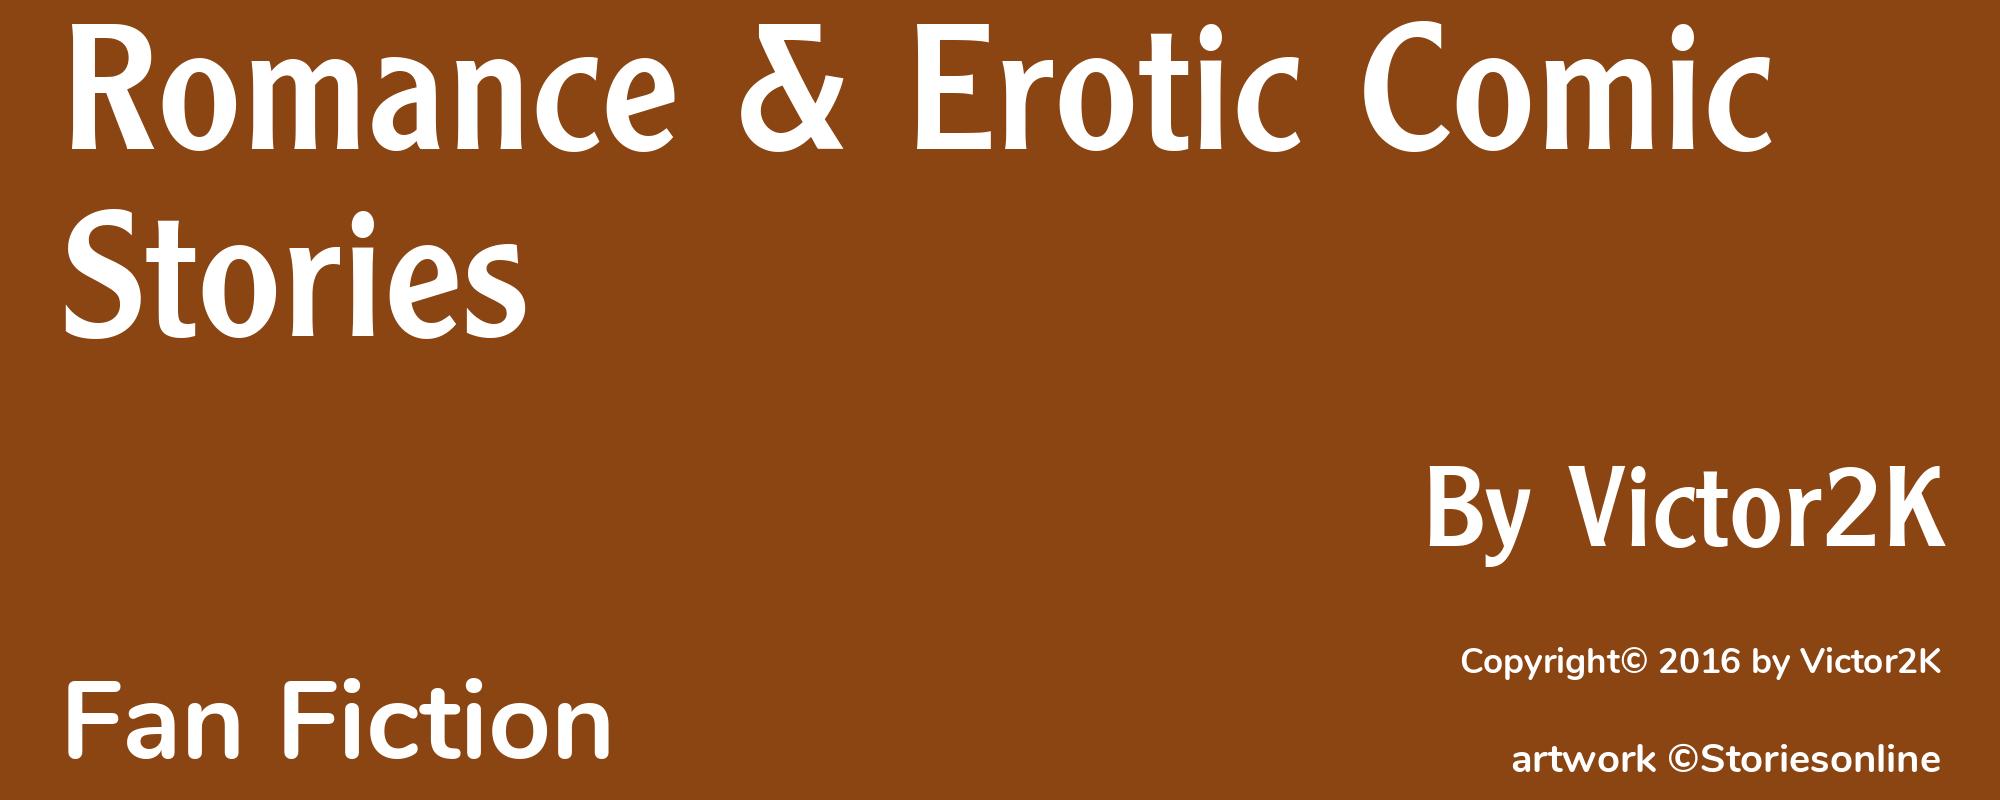 Romance & Erotic Comic Stories - Cover